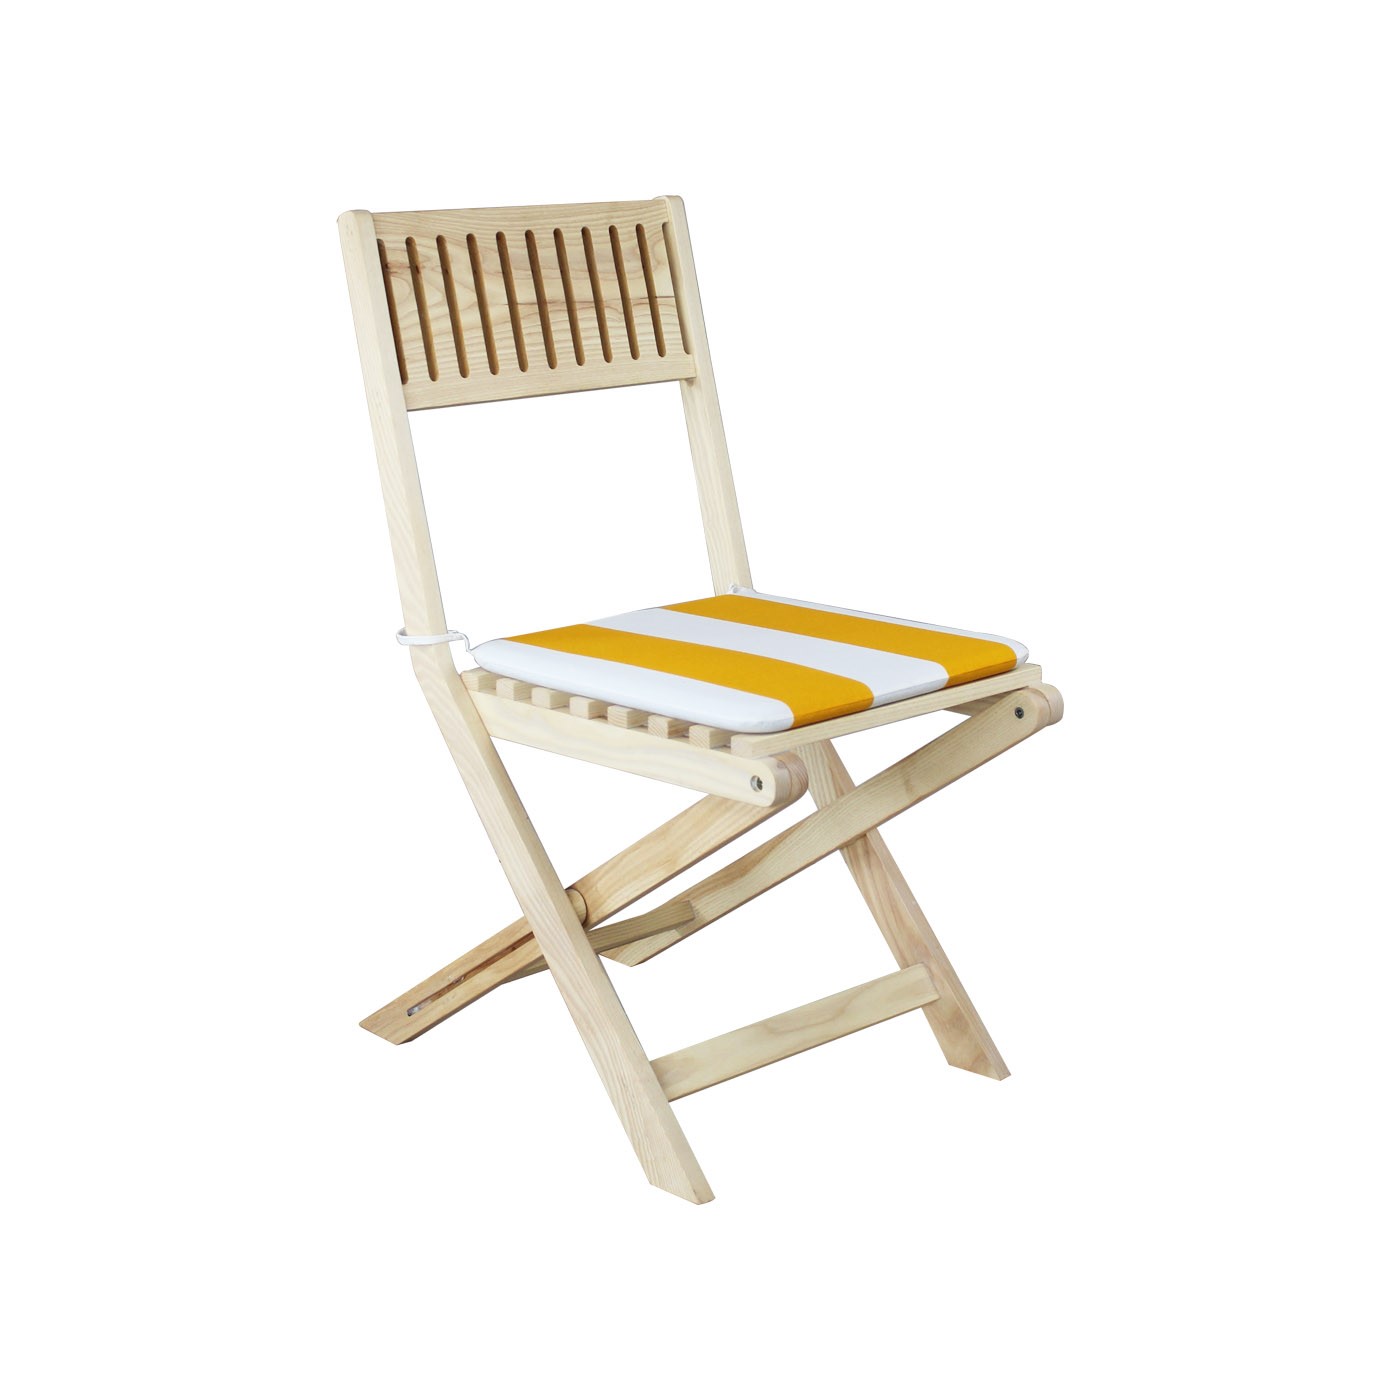 Palermo Yellow & White Striped Light Folding Chair